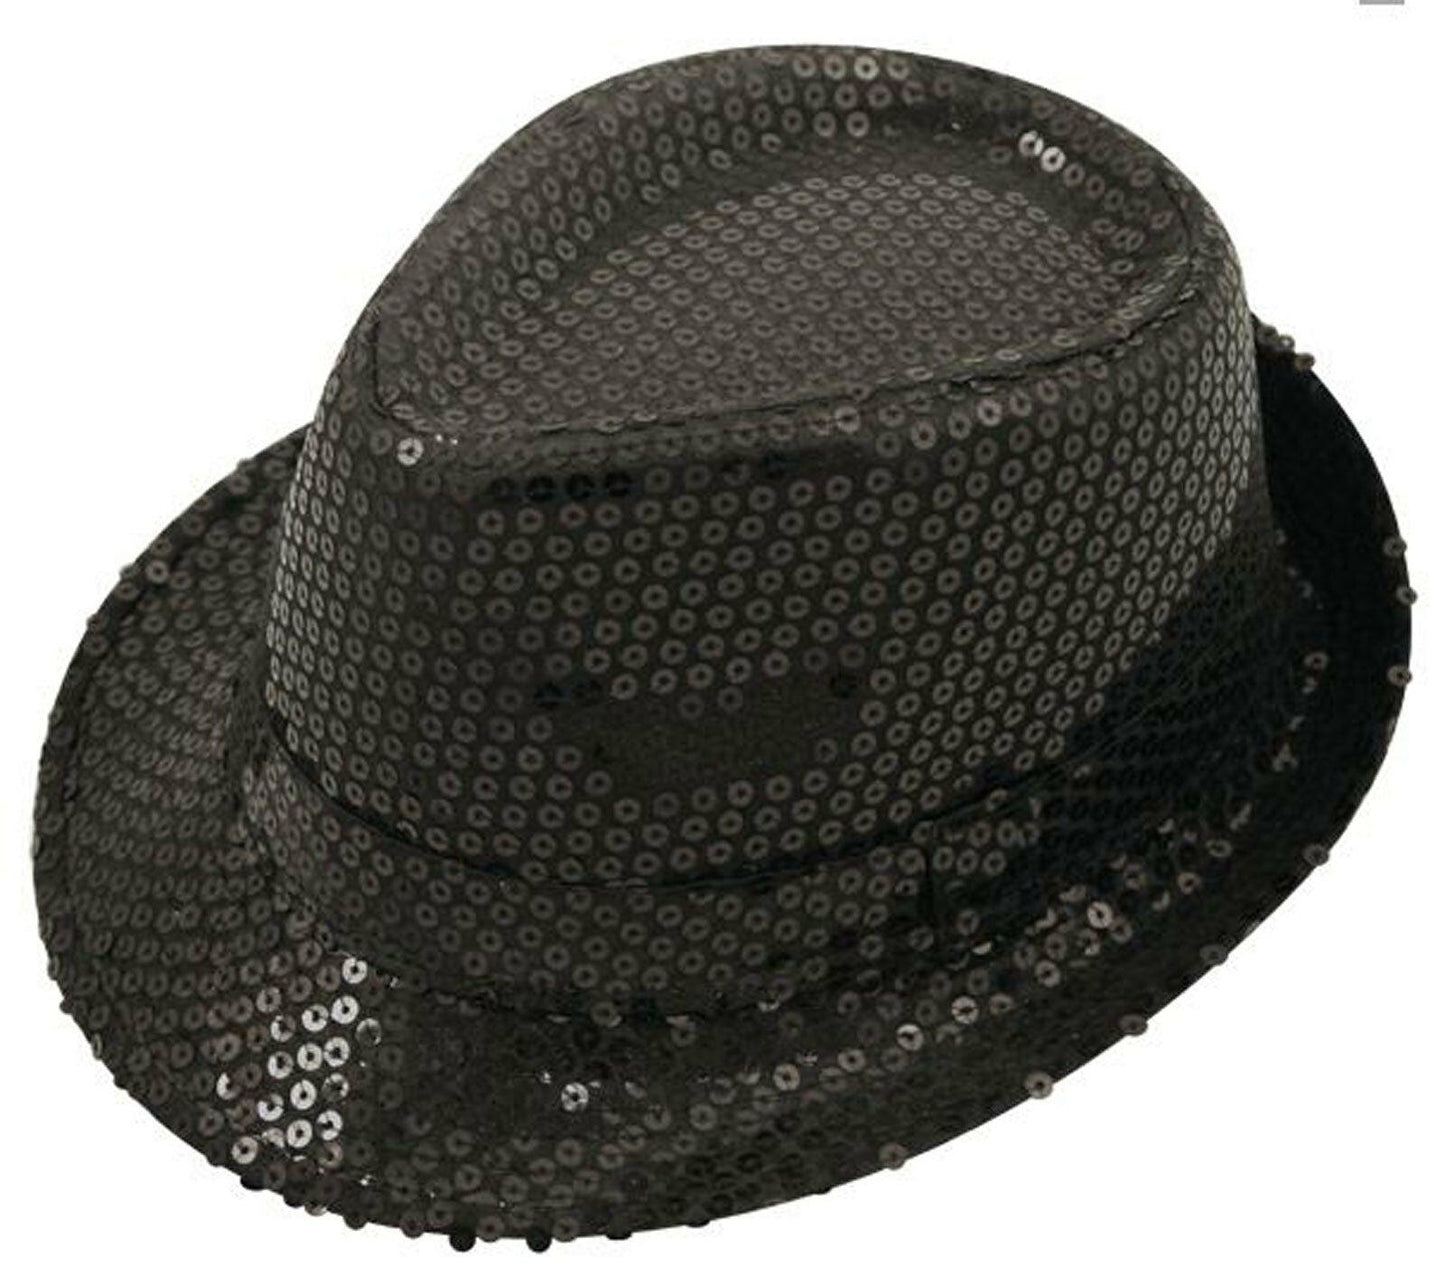 Unisex Sequin Gangster Hat Fedora Trilby Sequin Cap Hats Dance Party - Labreeze